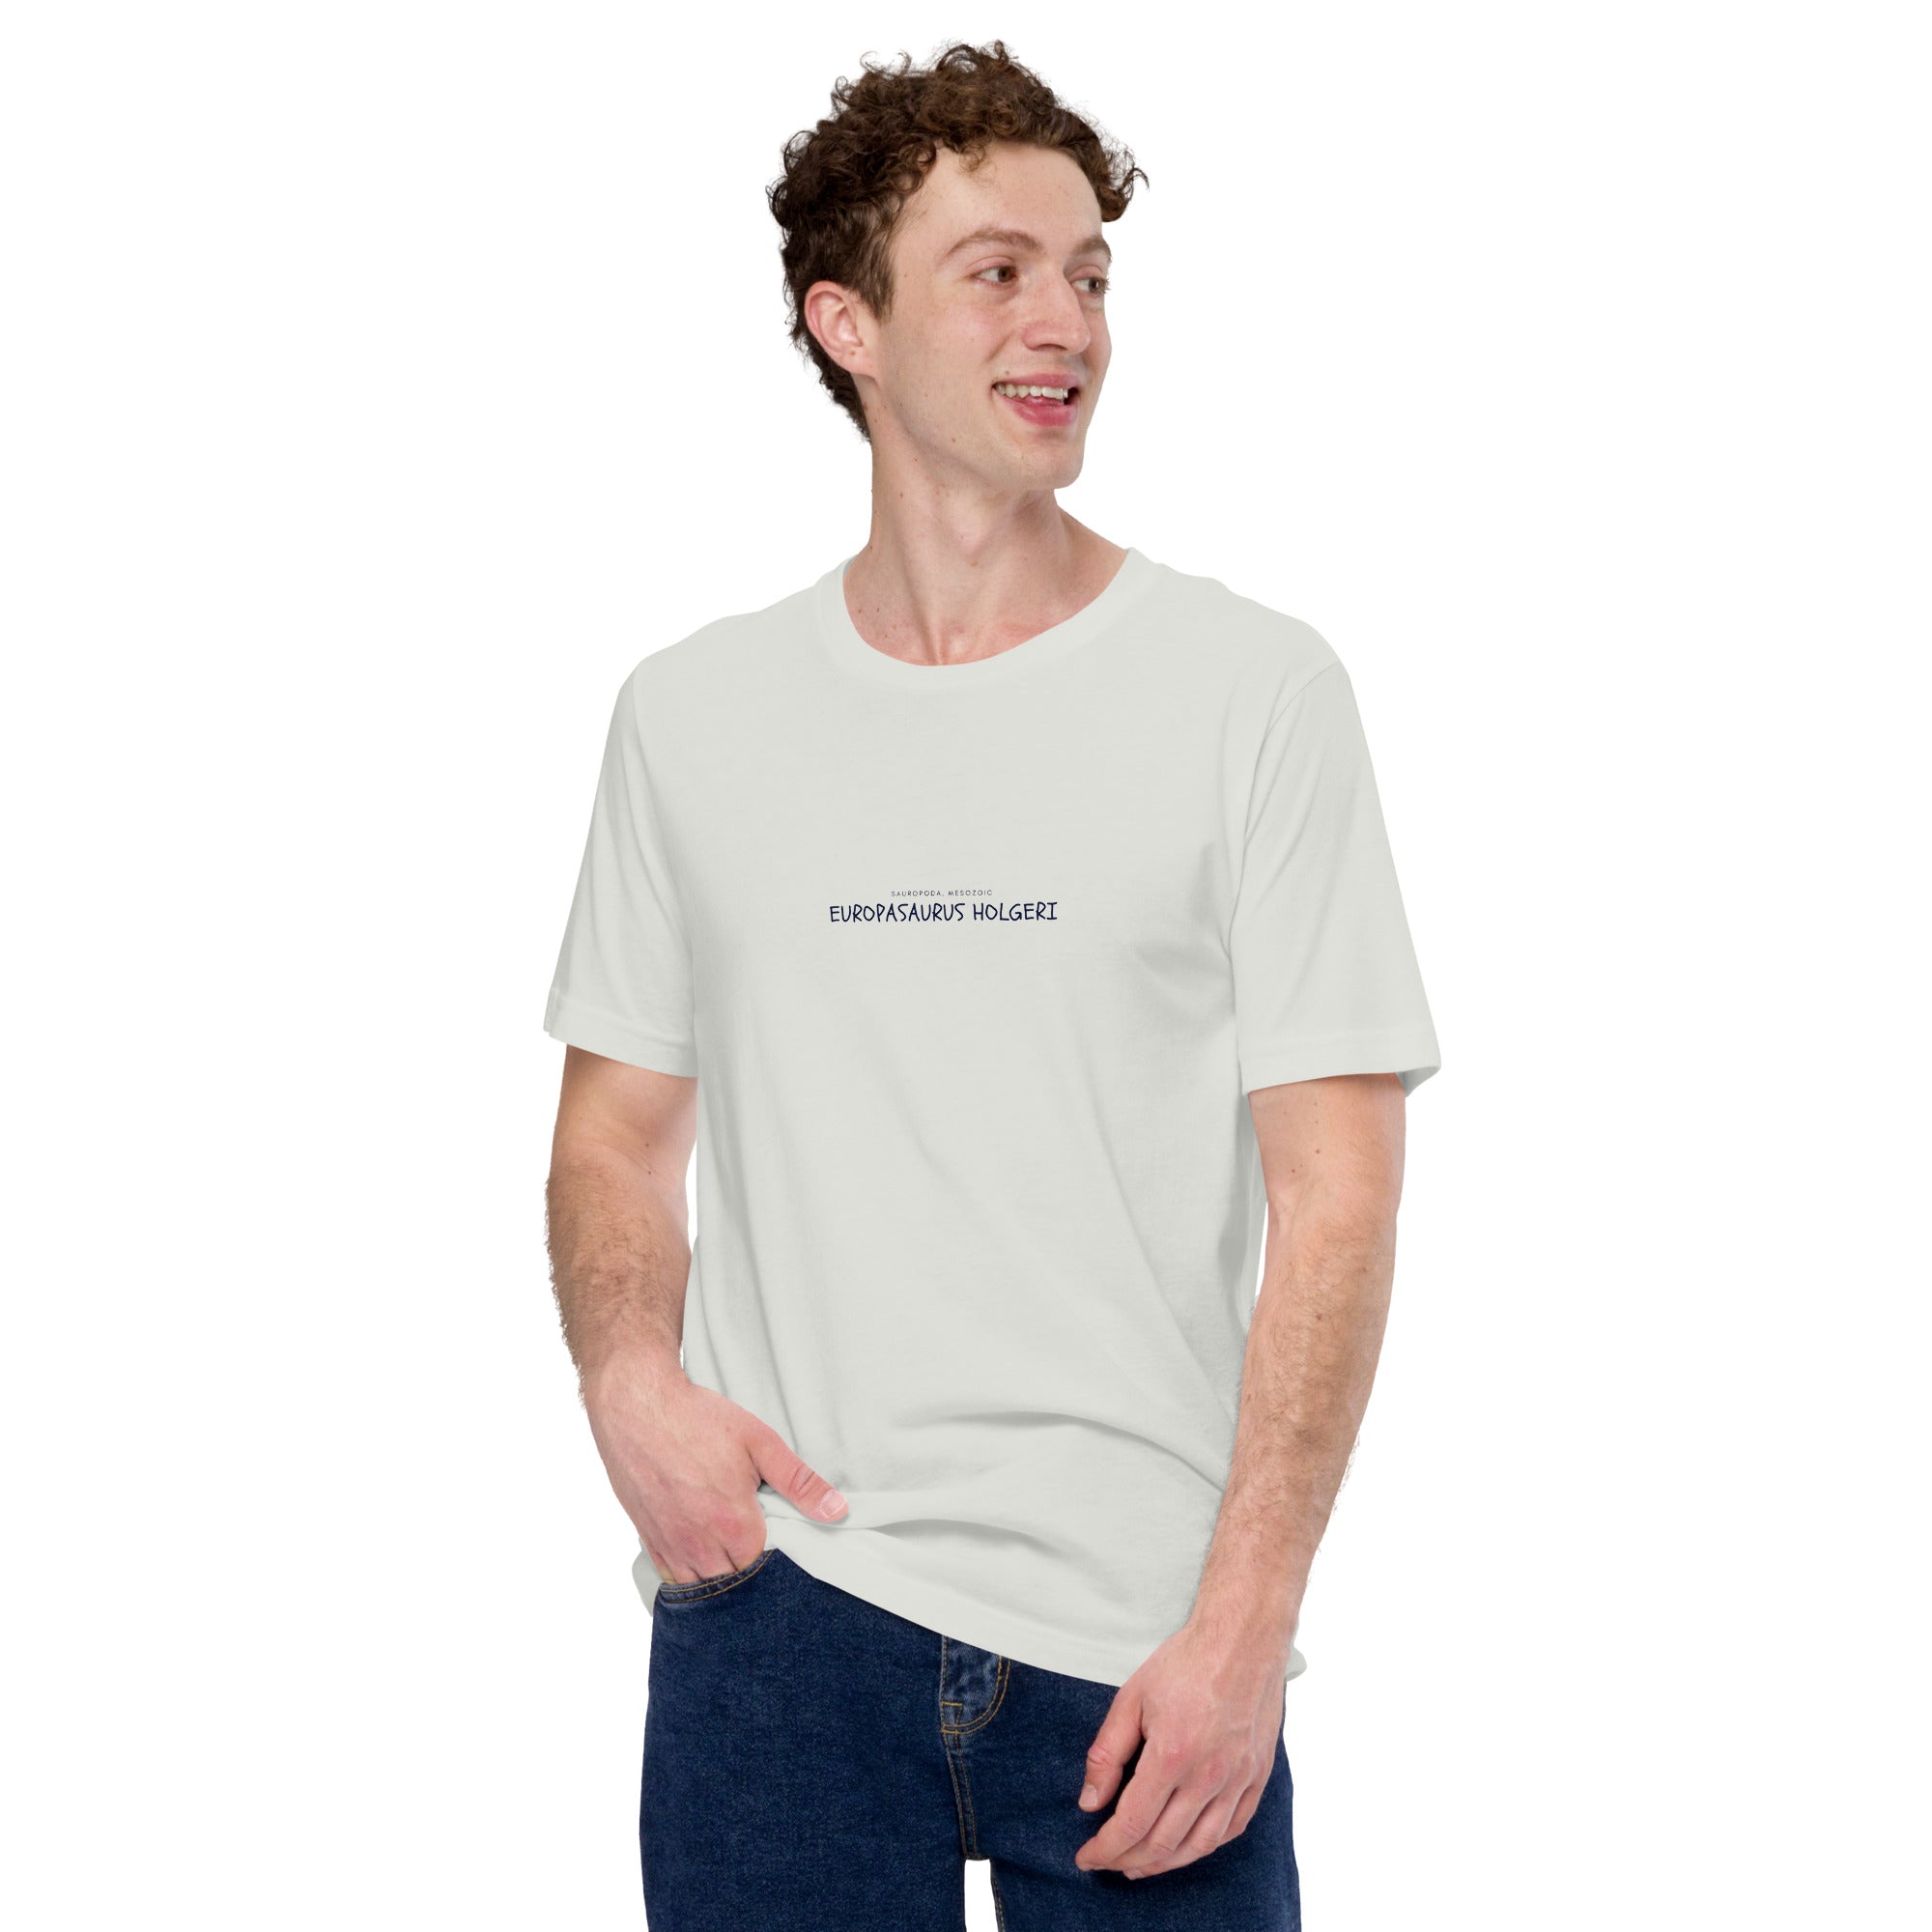 Camiseta unisex con texto "Europasaurus holgeri"